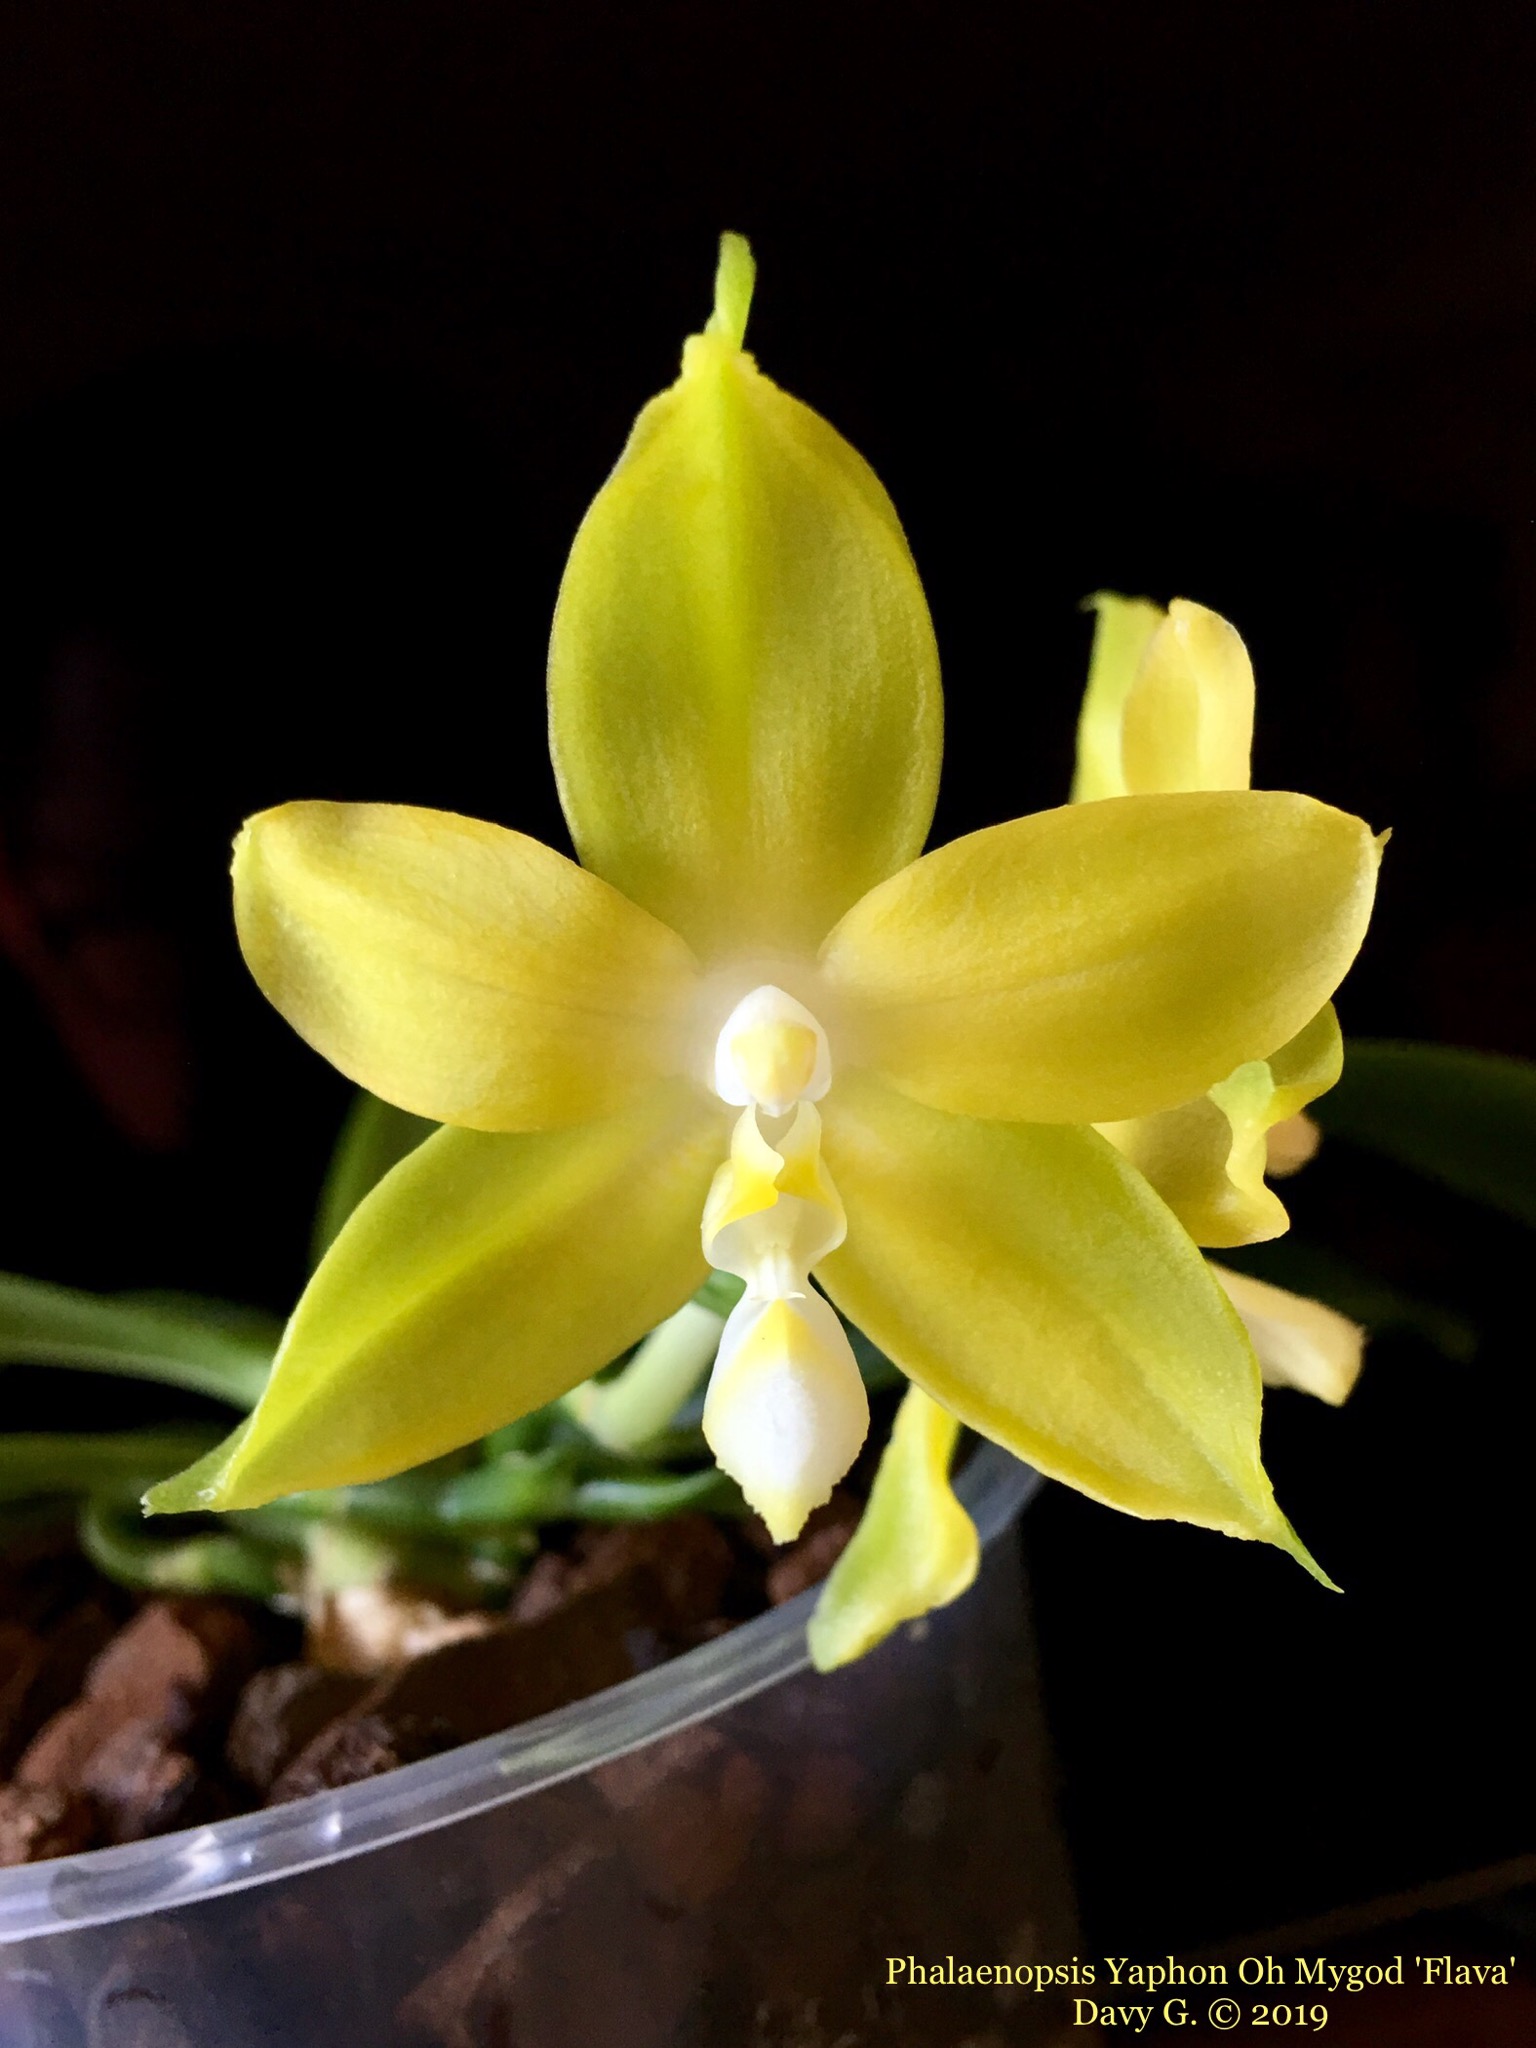 Phalaenopsis Yaphon Oh Mygod 'Flava' 2a8f6310